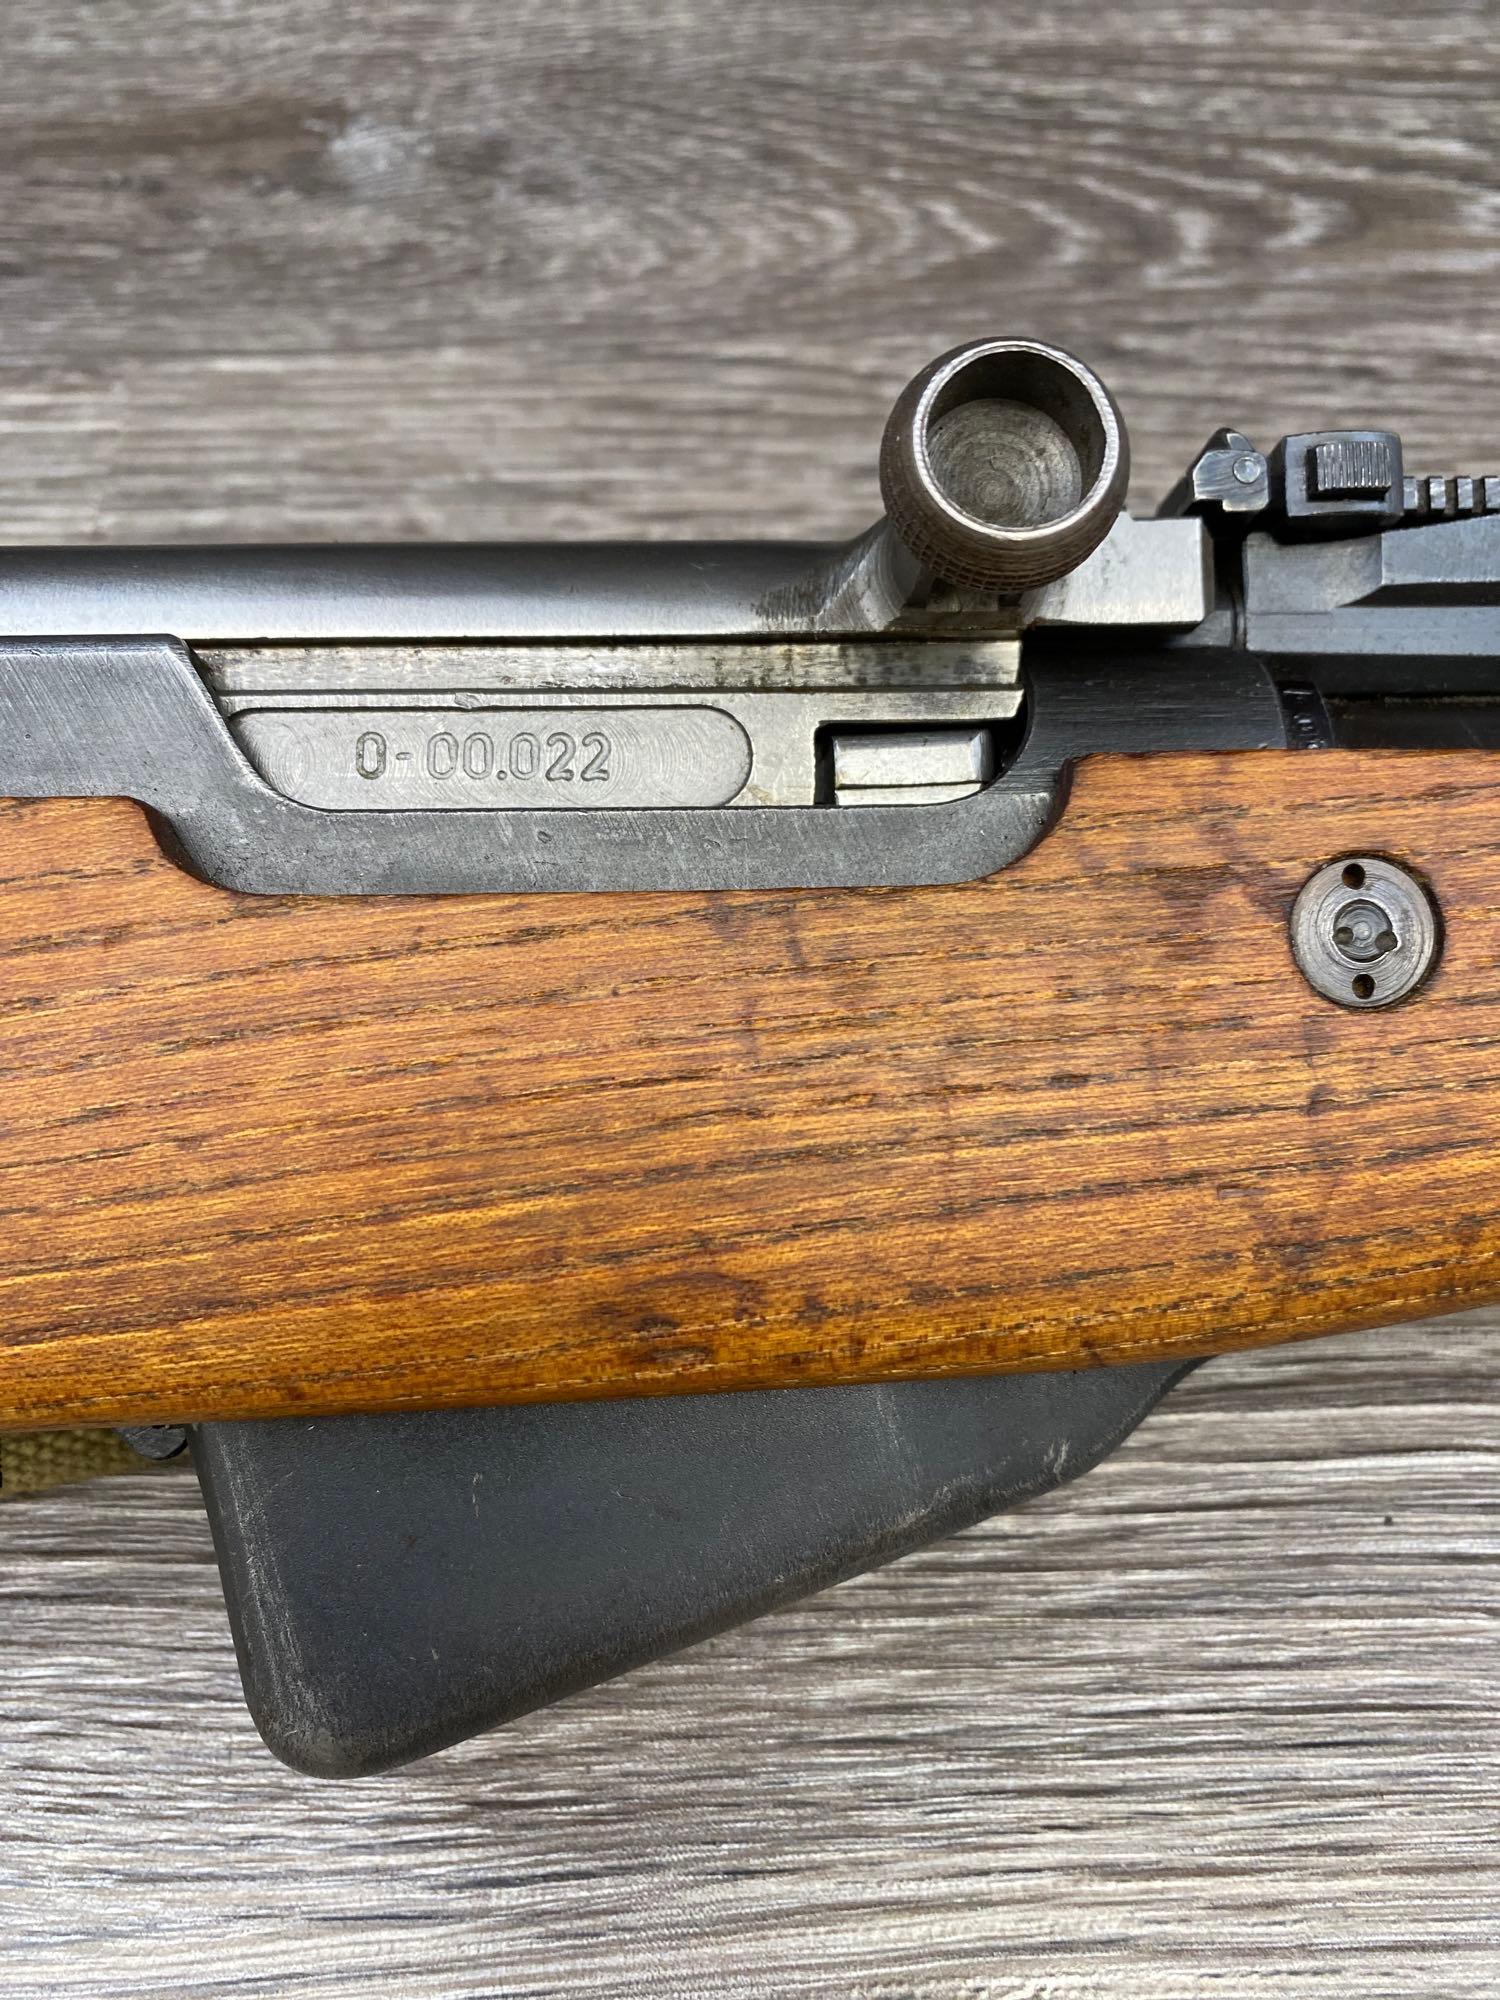 YUGOSLAVIAN SKS M59/66 7.62x39mm CAL. BOLT-ACTION RIFLE